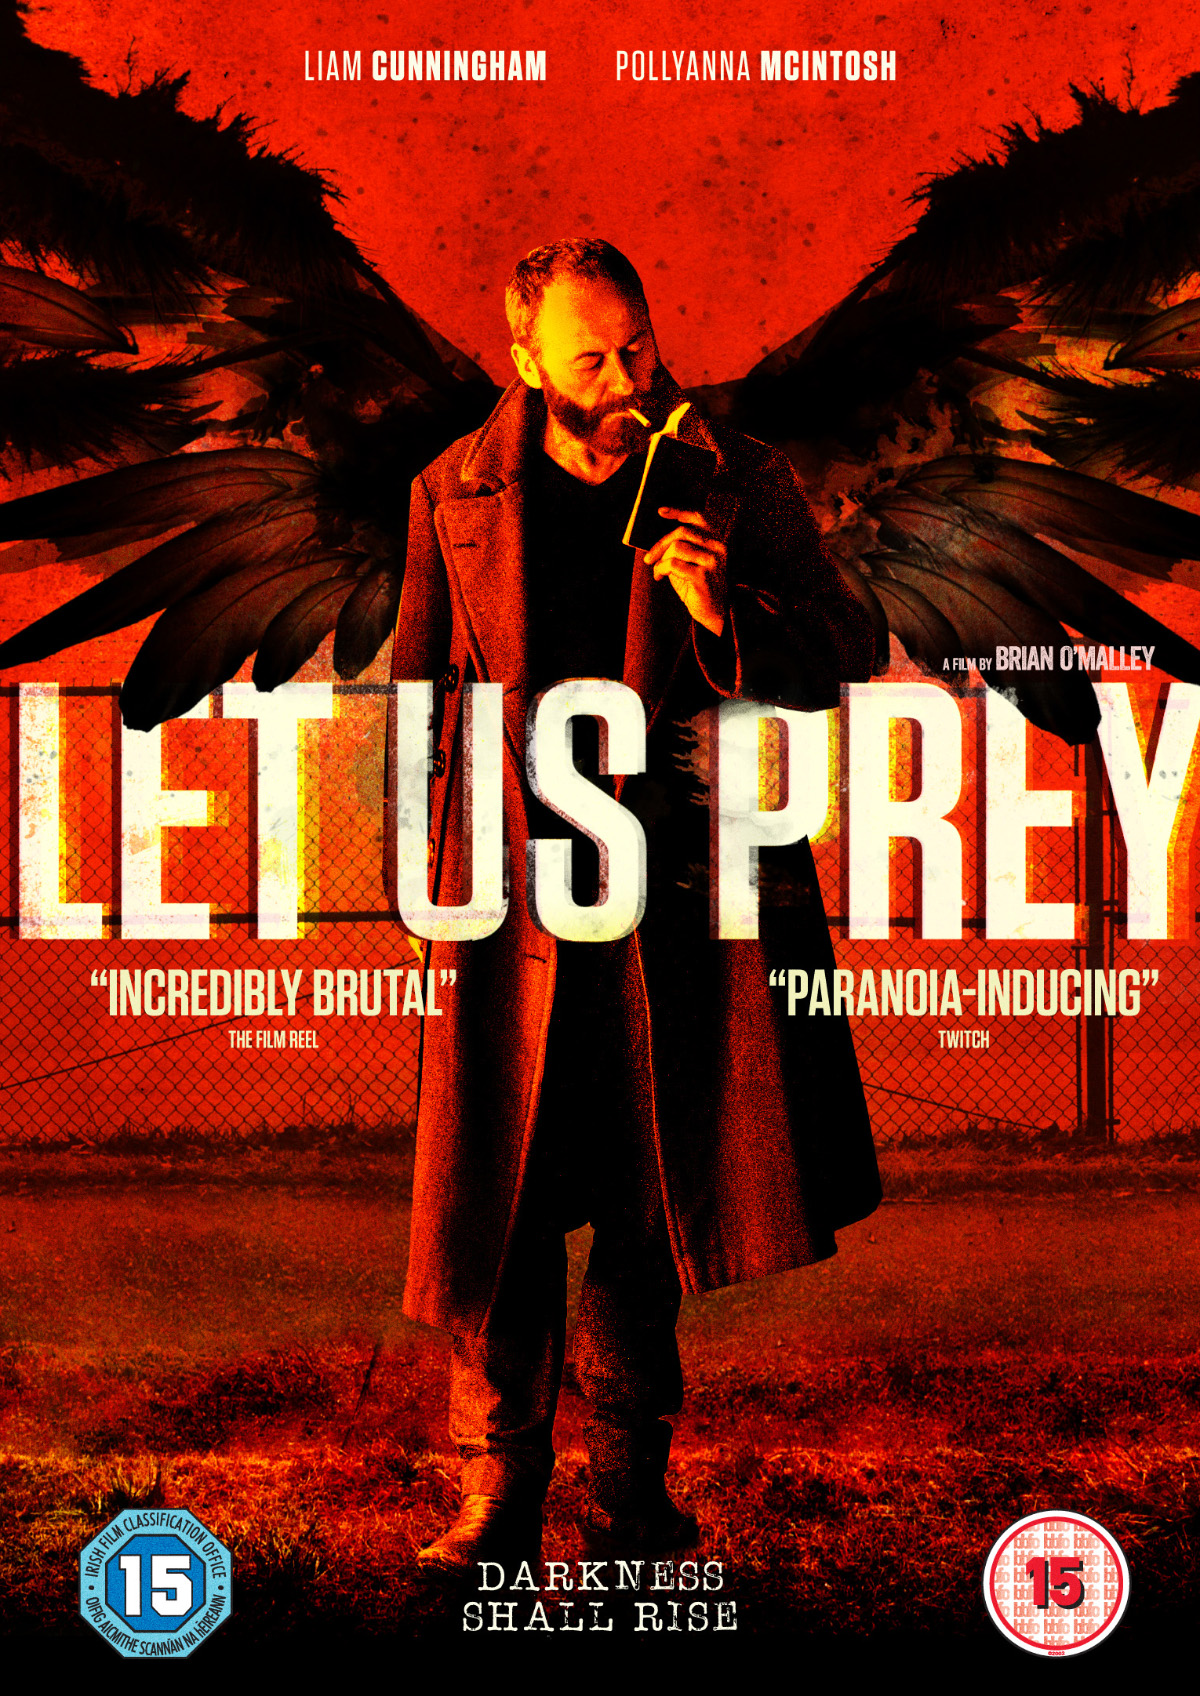 Let Us Prey DVD review: Liam Cunningham is the Devil